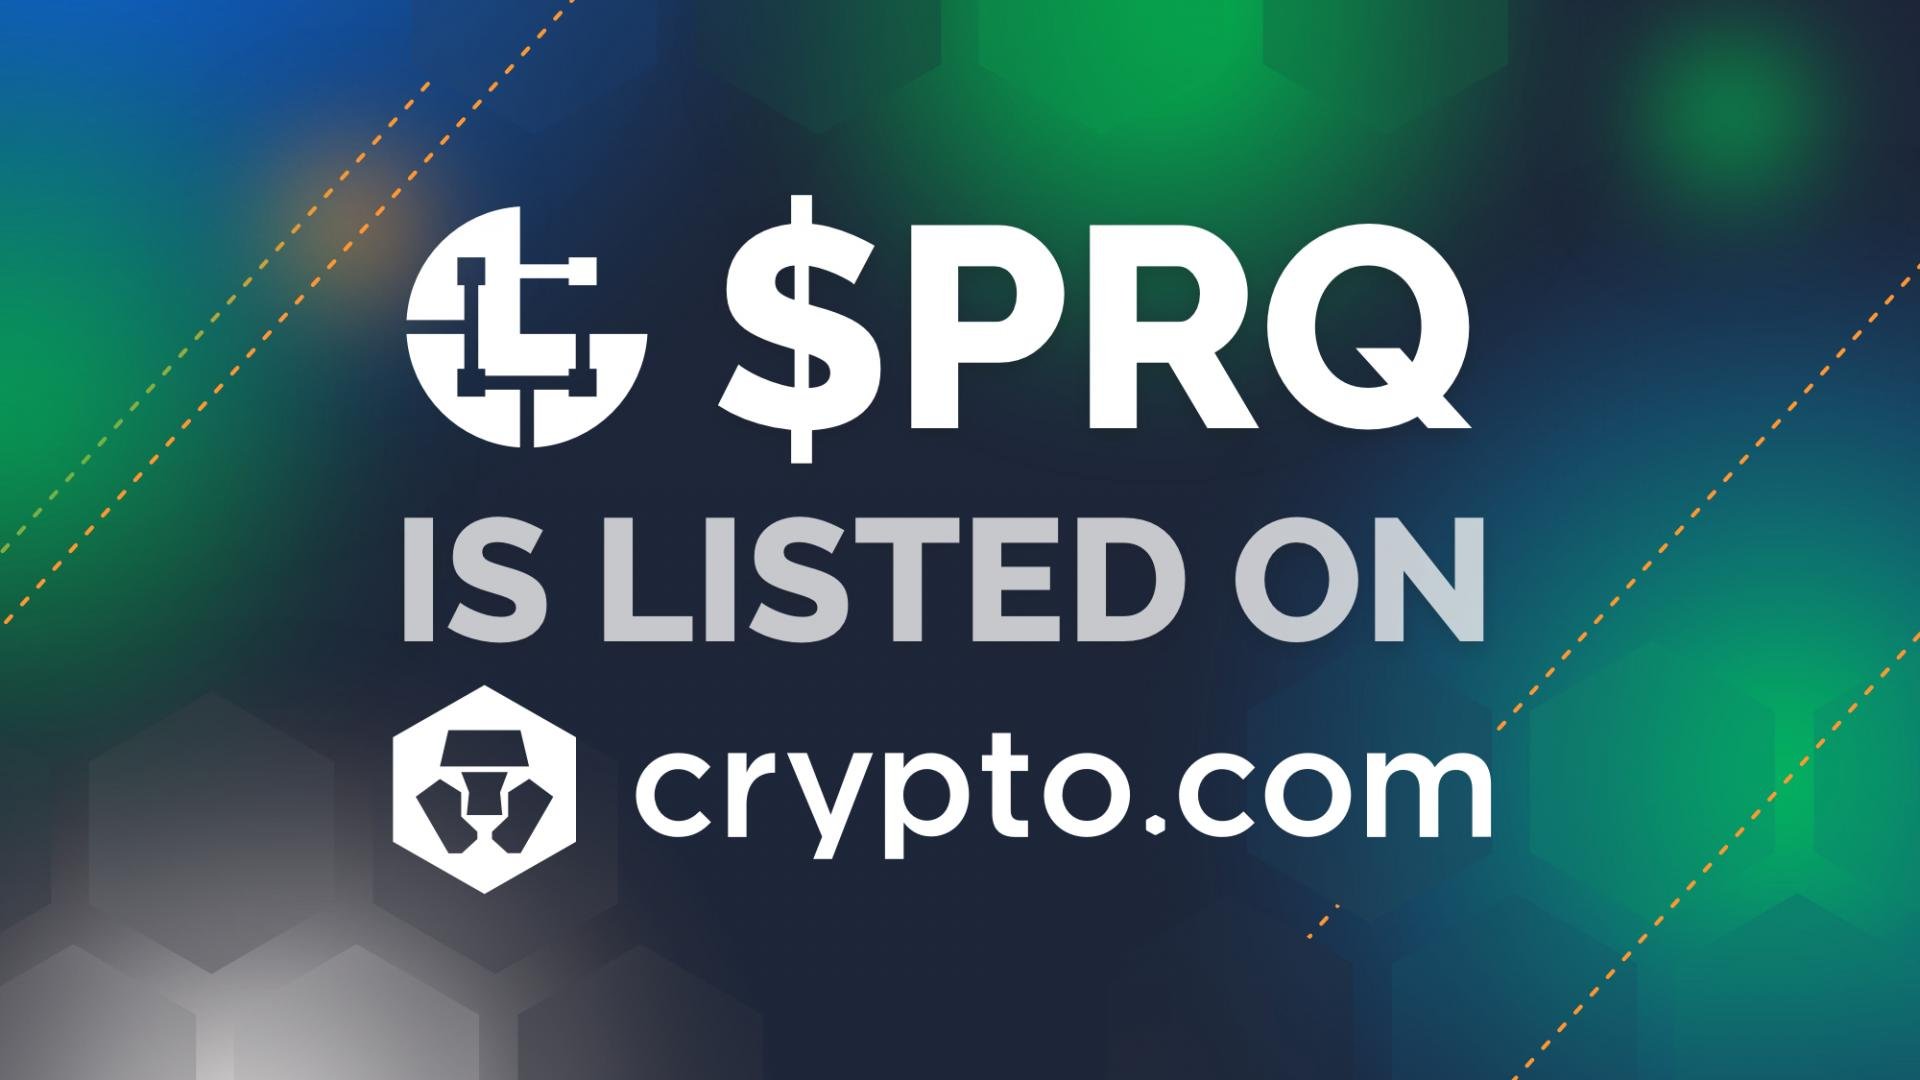 PARSIQ ($PRQ) Lands on the Crypto.com Exchange 10